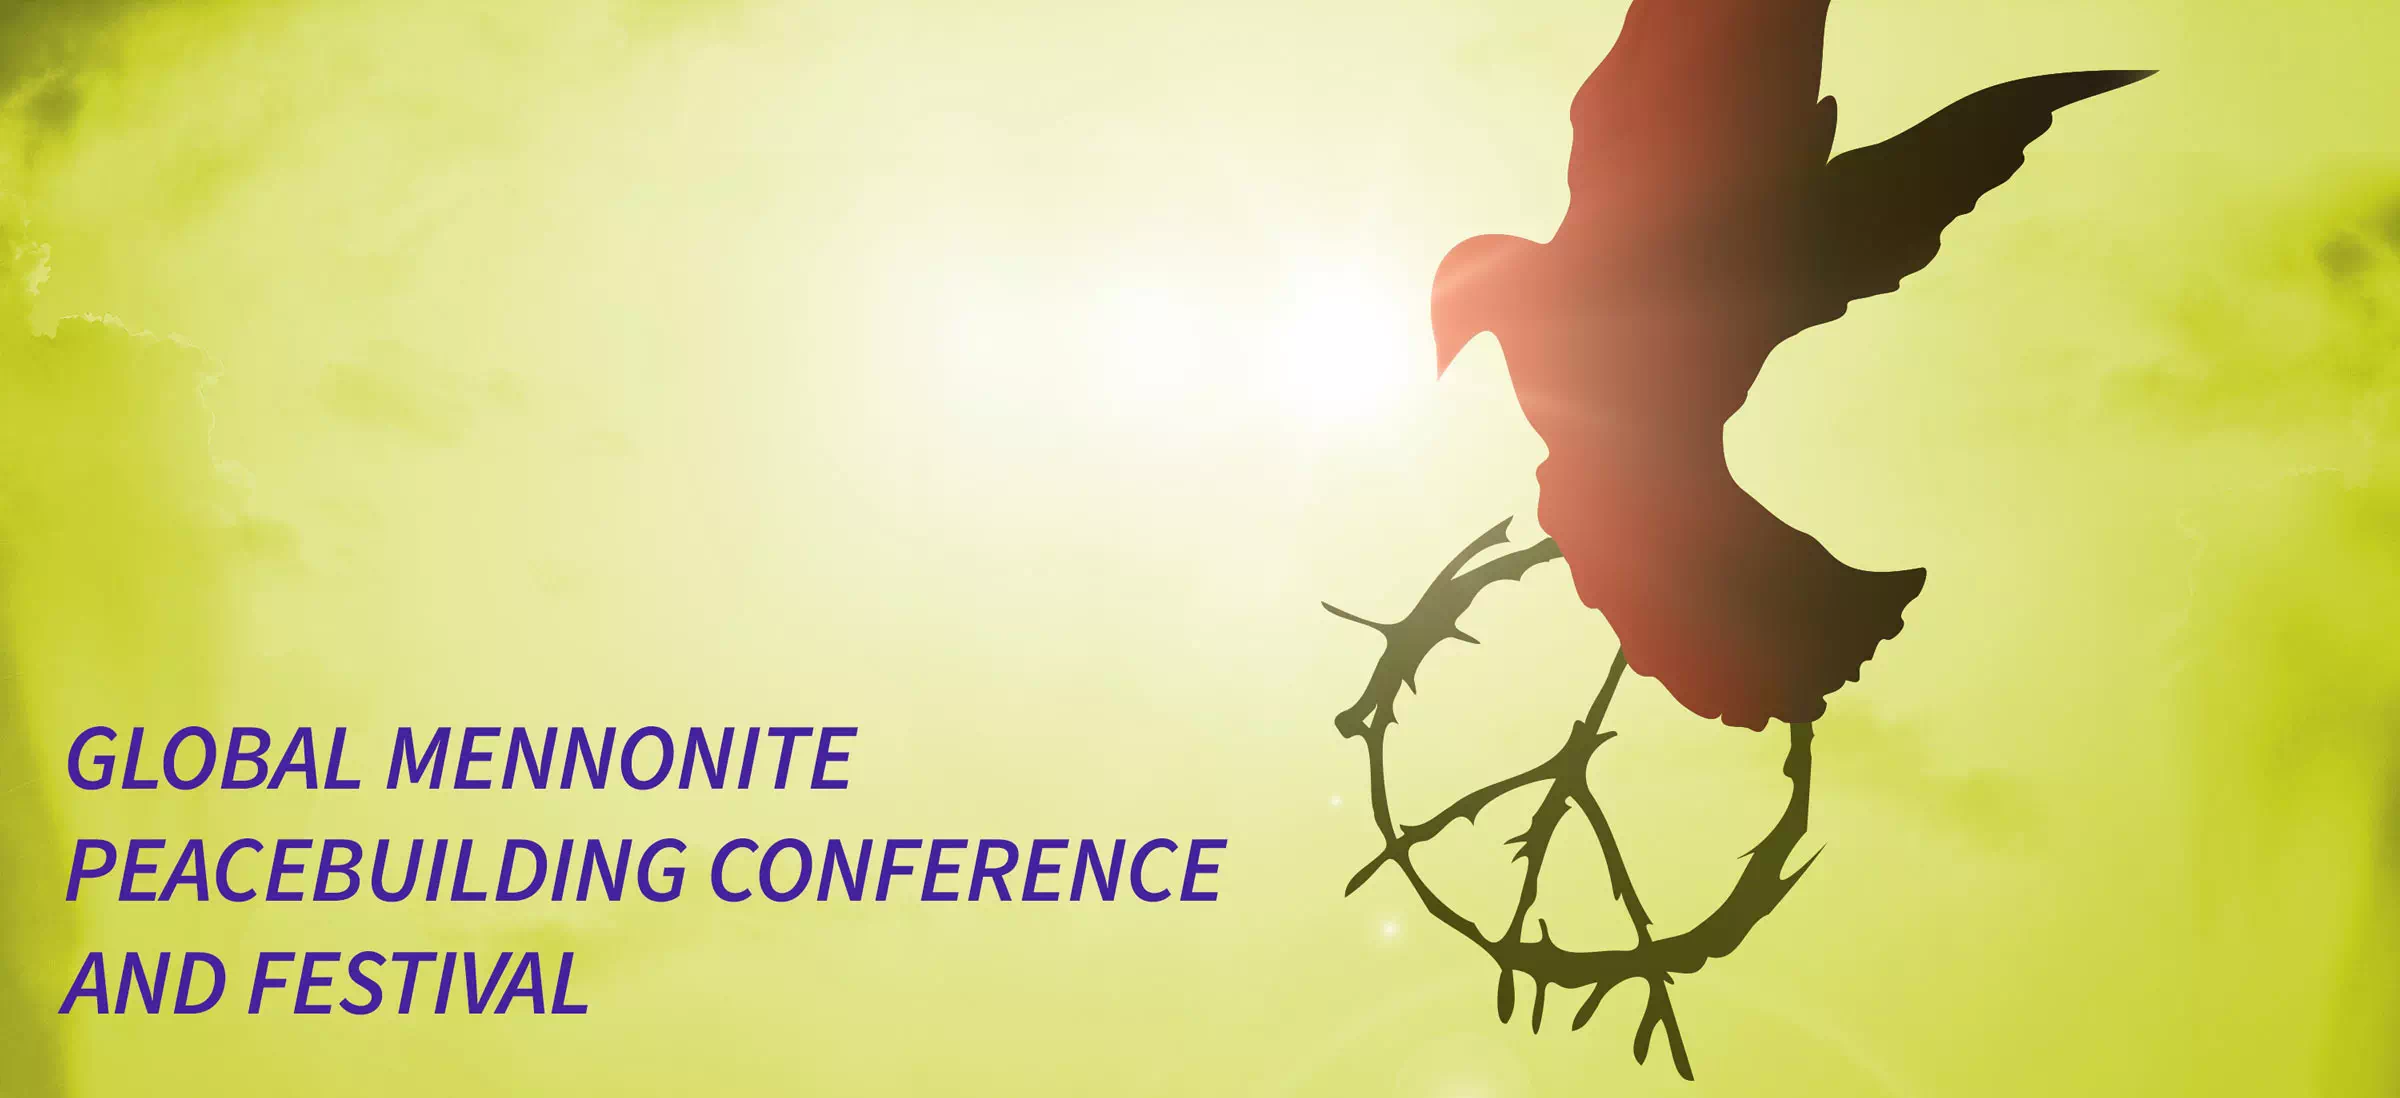 Global Mennonite Peacebuilding Conference and Festival.